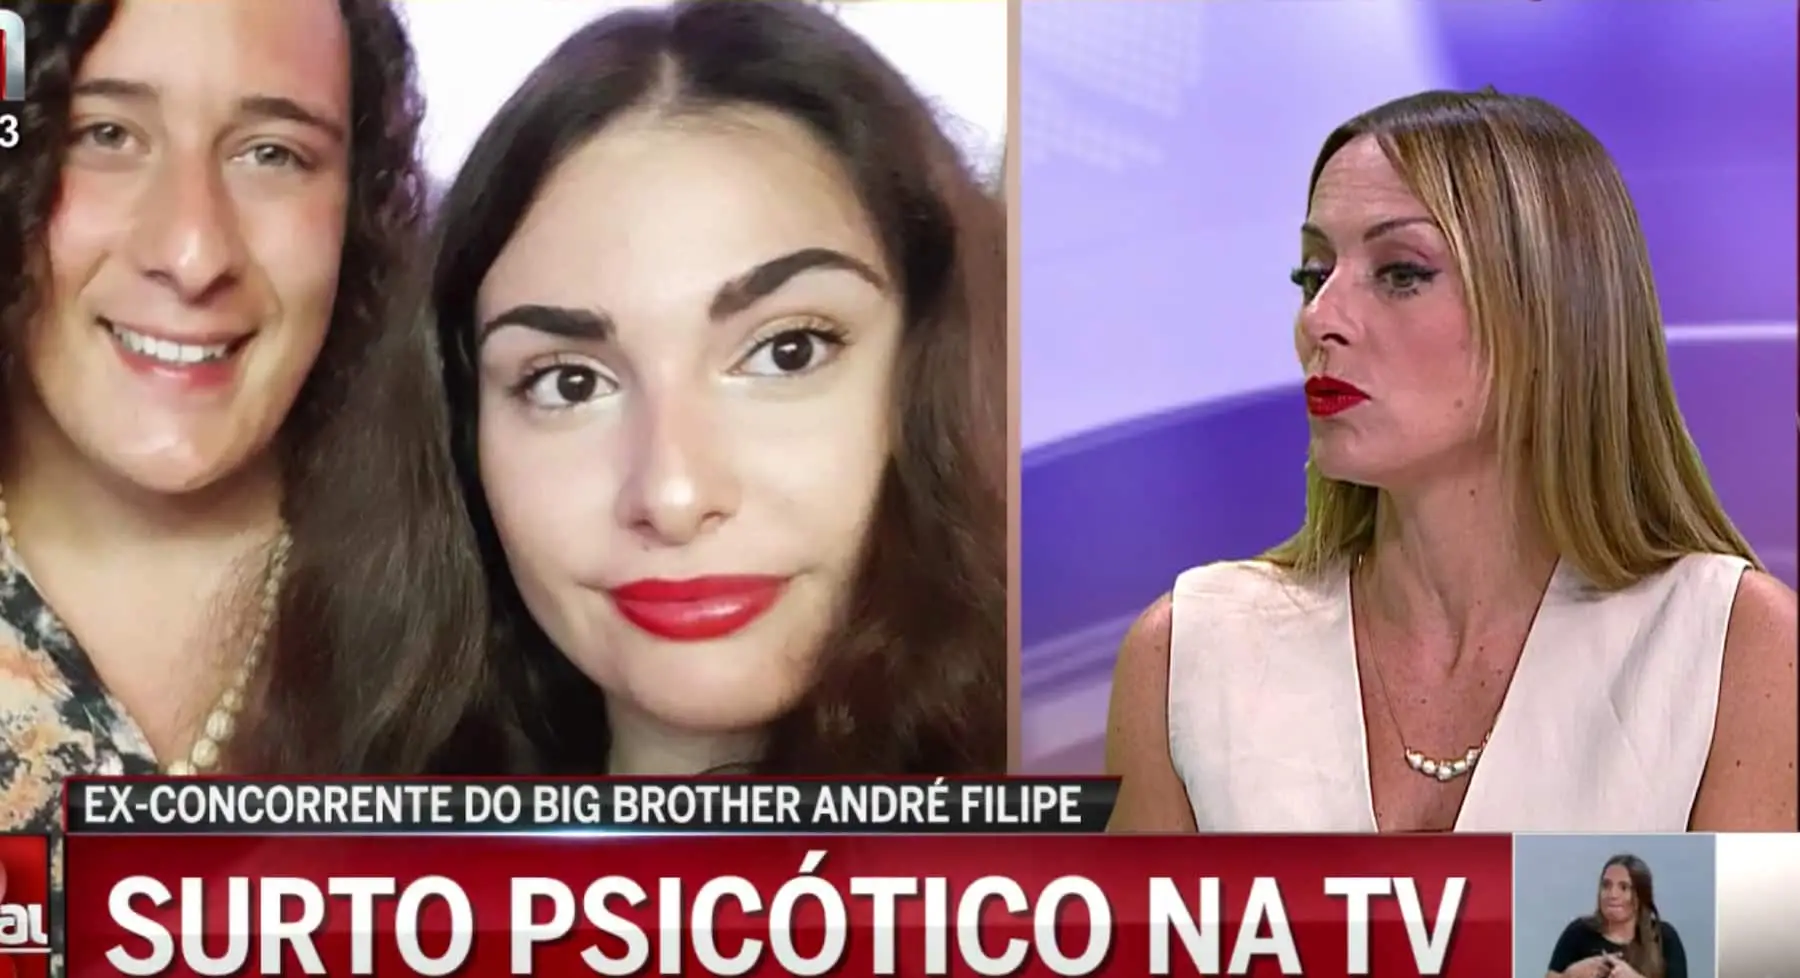 Joana Amaral Dias Critica Producao Big Brother Caso Andre Filipe